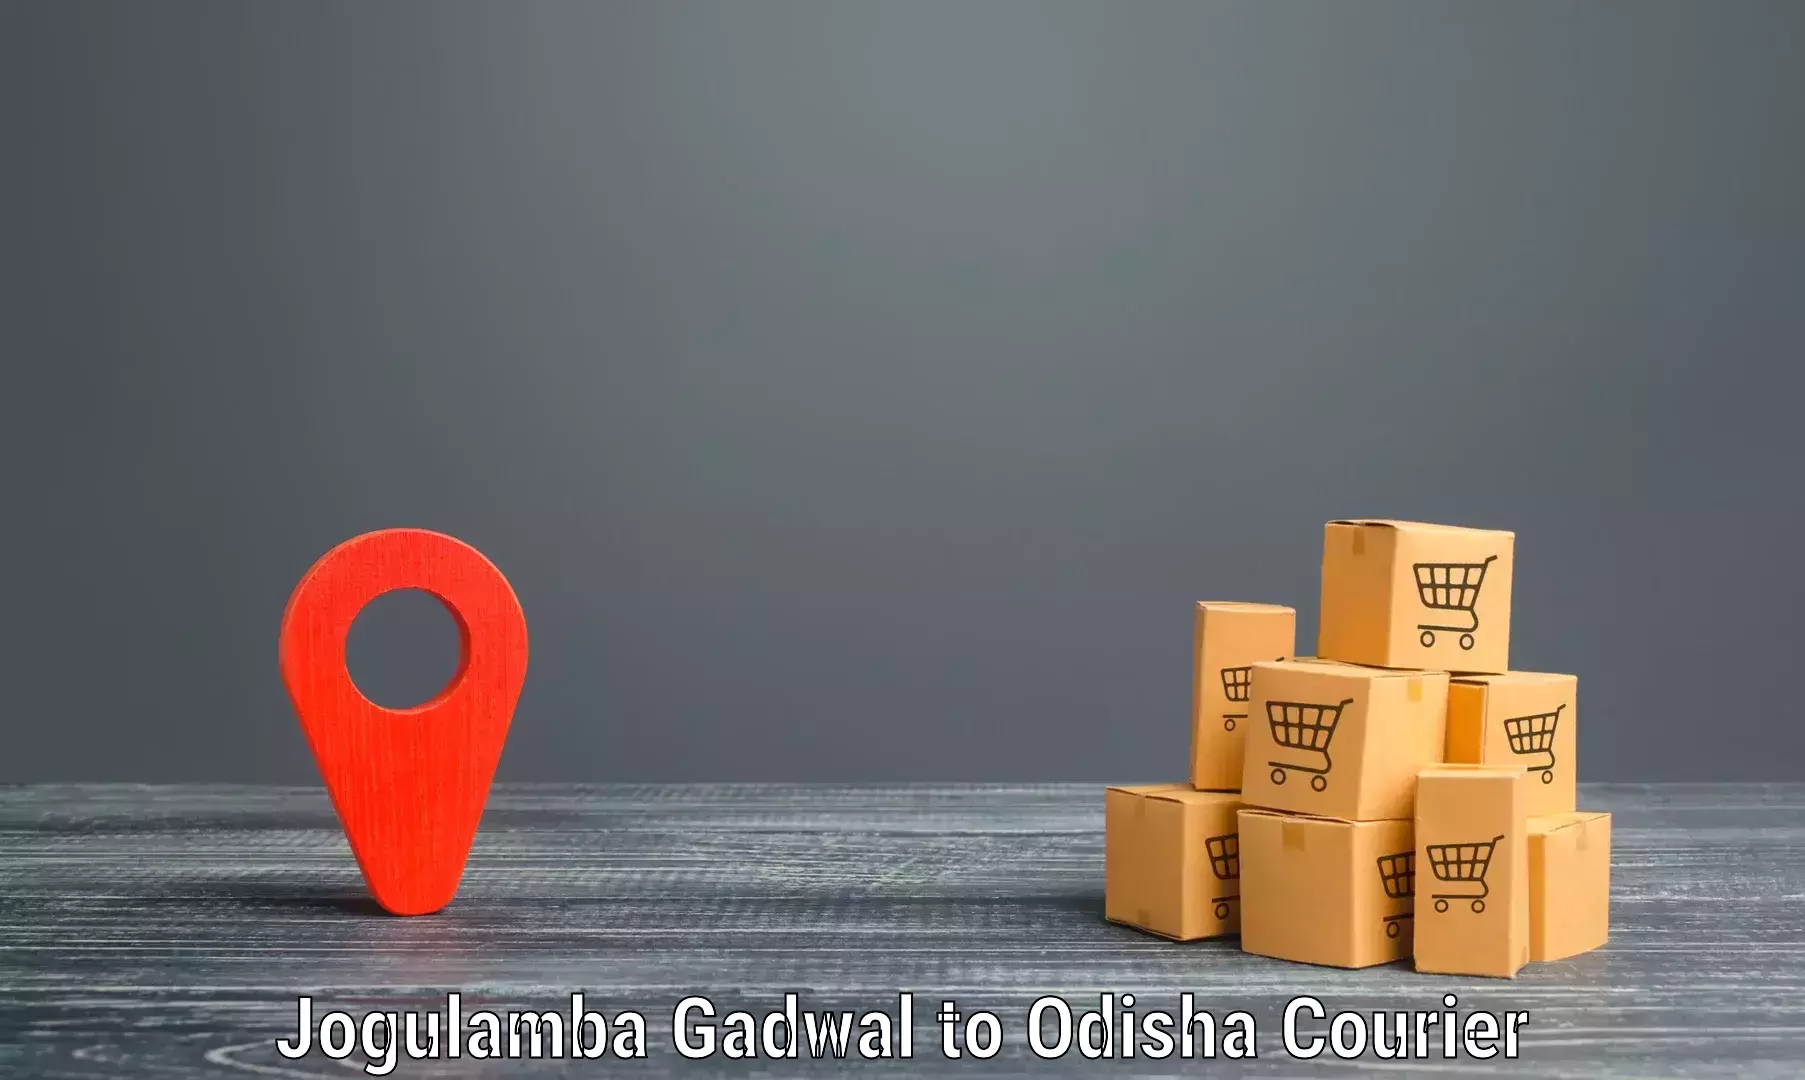 Global courier networks Jogulamba Gadwal to Odisha